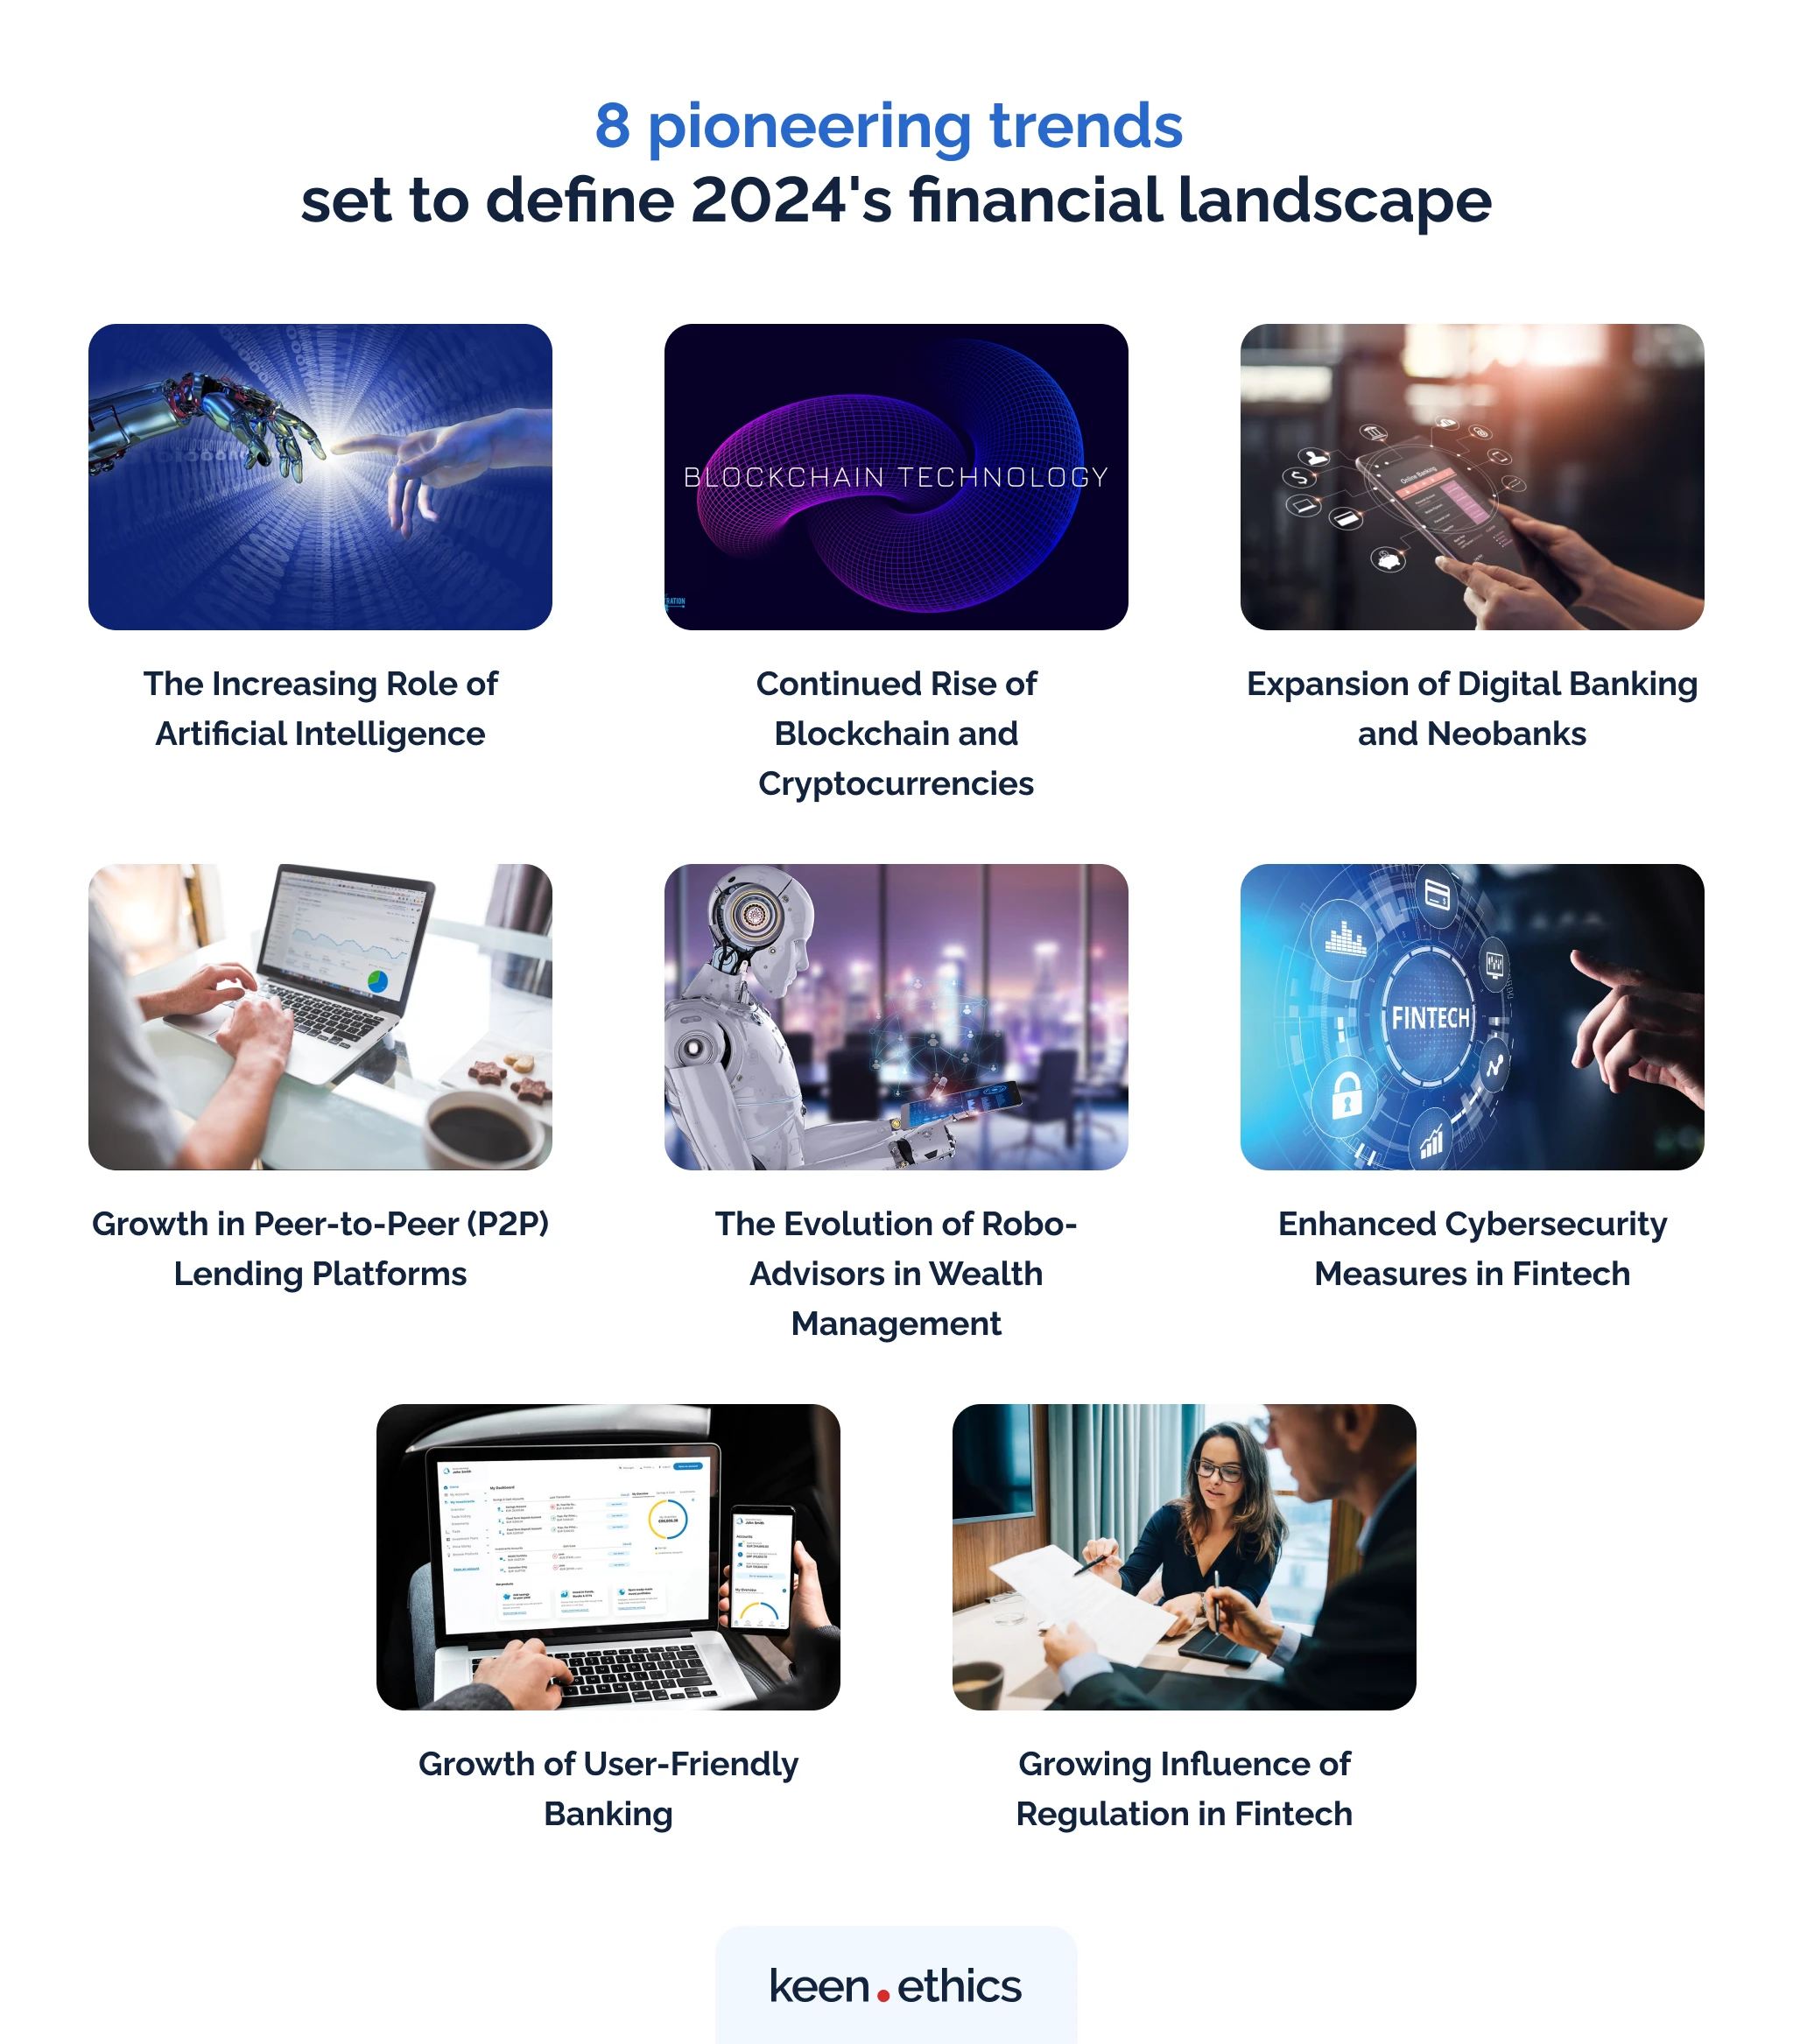 8 pioneering trends set to define 2024's financial landscape